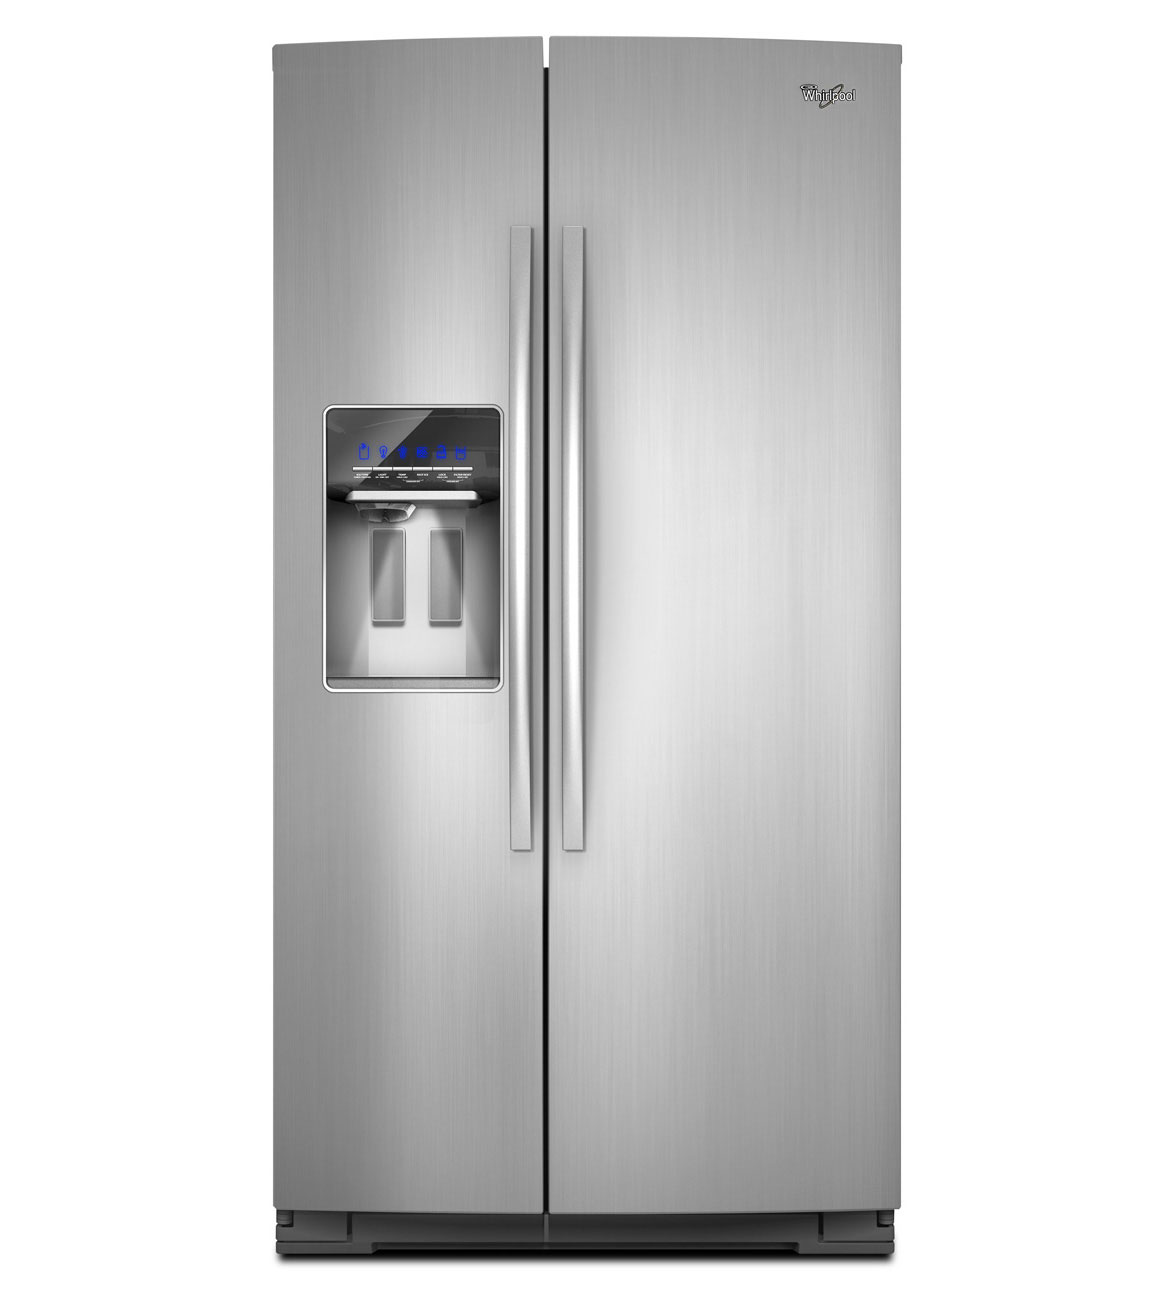 Flashing 88 on refrigerator Questions - Fixya